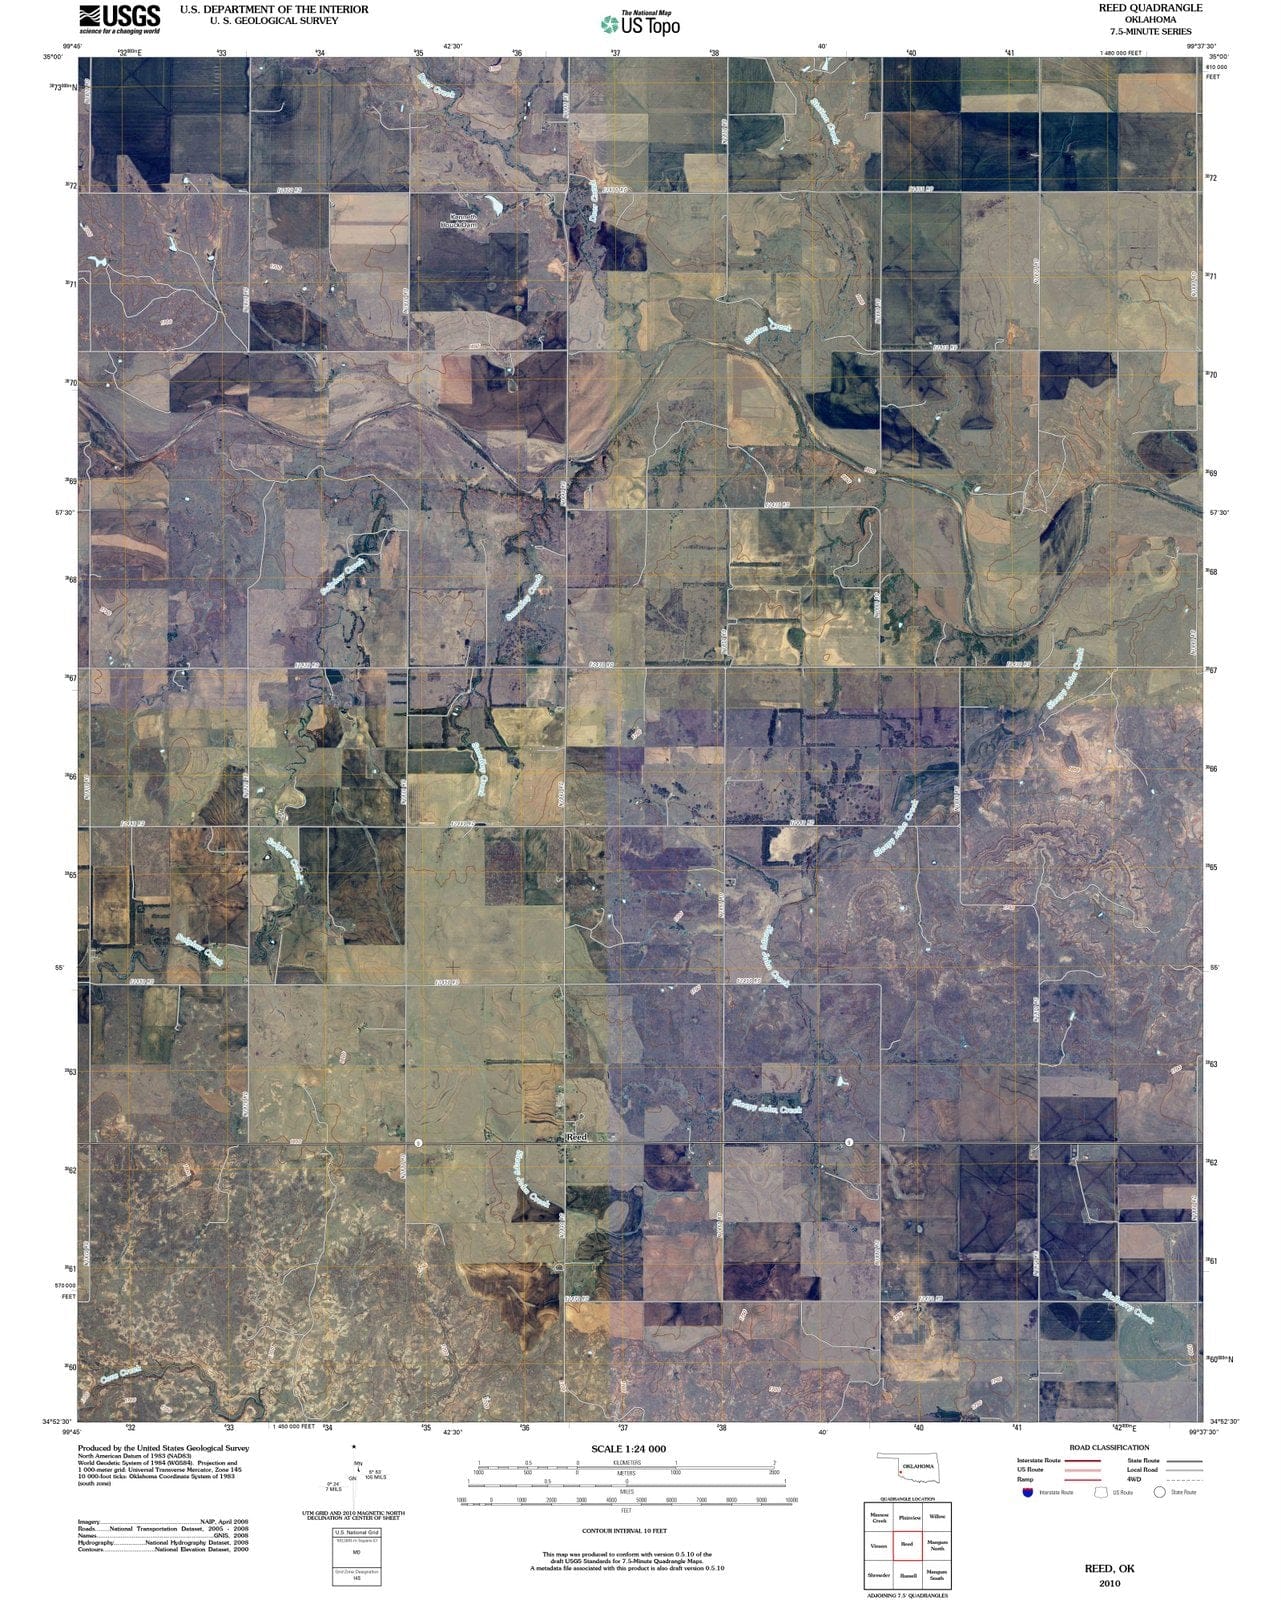 2010 Reed, OK - Oklahoma - USGS Topographic Map